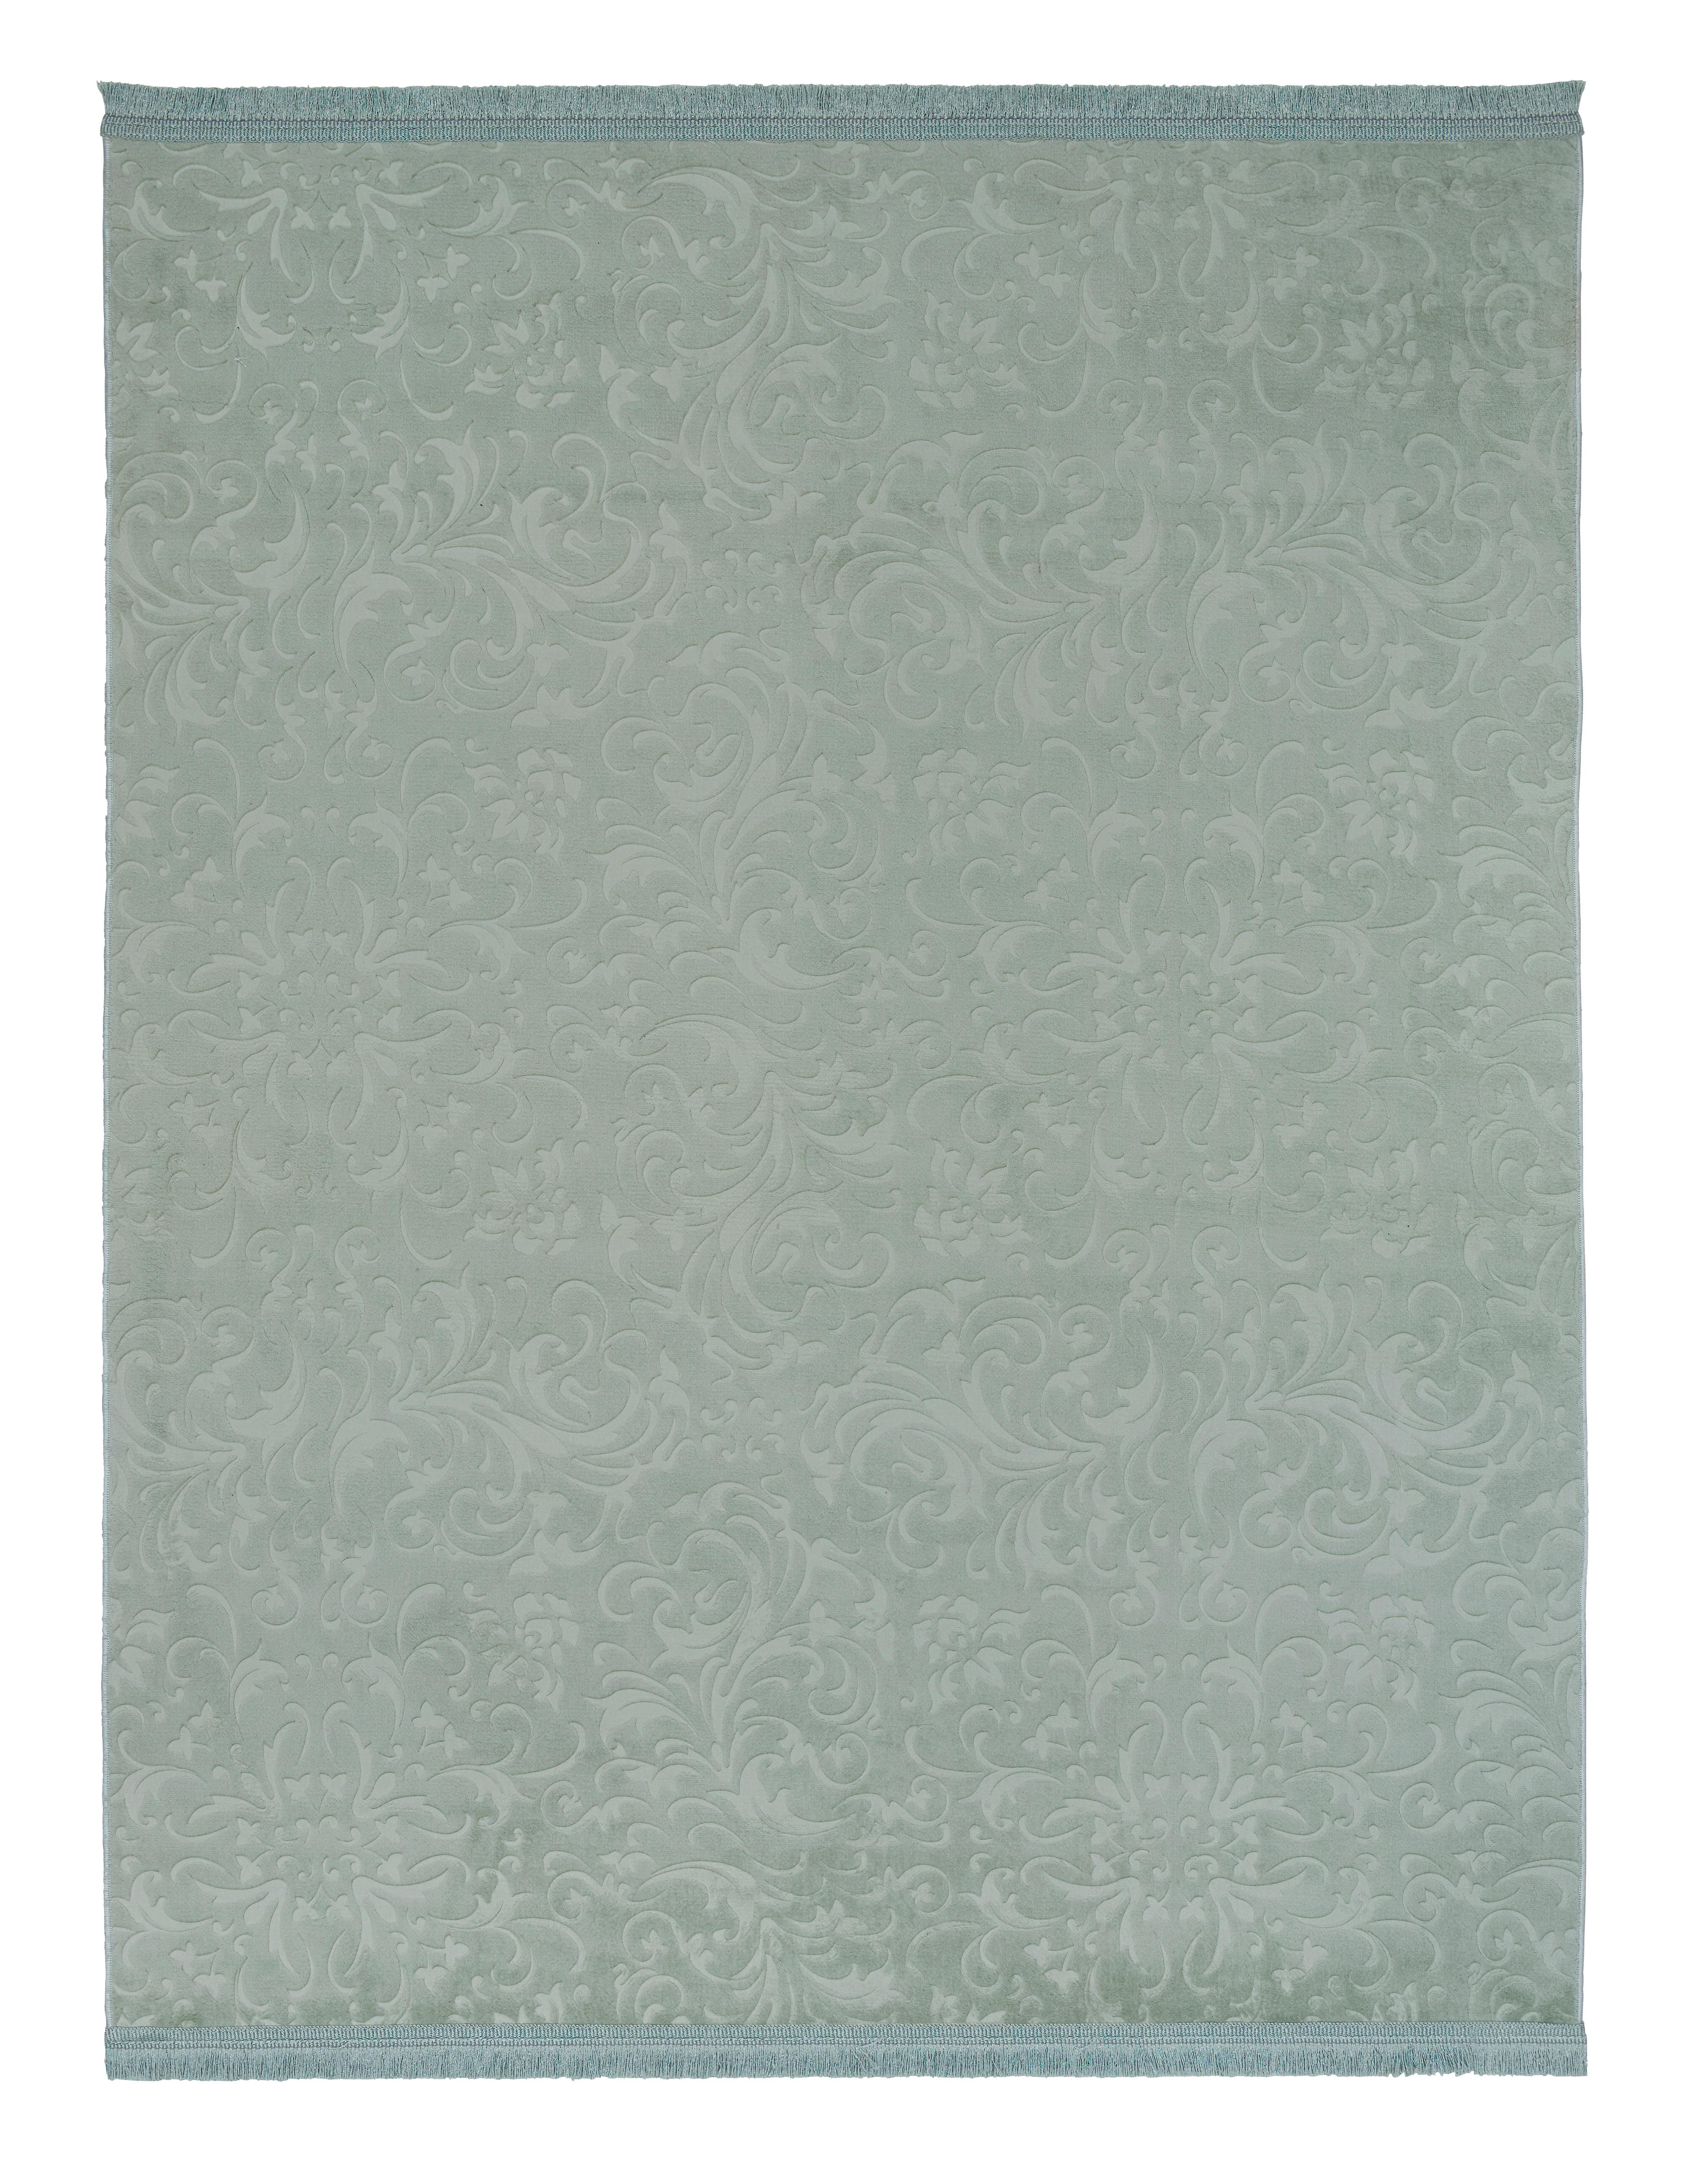 Tkaný Koberec Daphne 2, 120/160cm, Zelená - zelená, Moderný, textil (120/160cm) - Modern Living